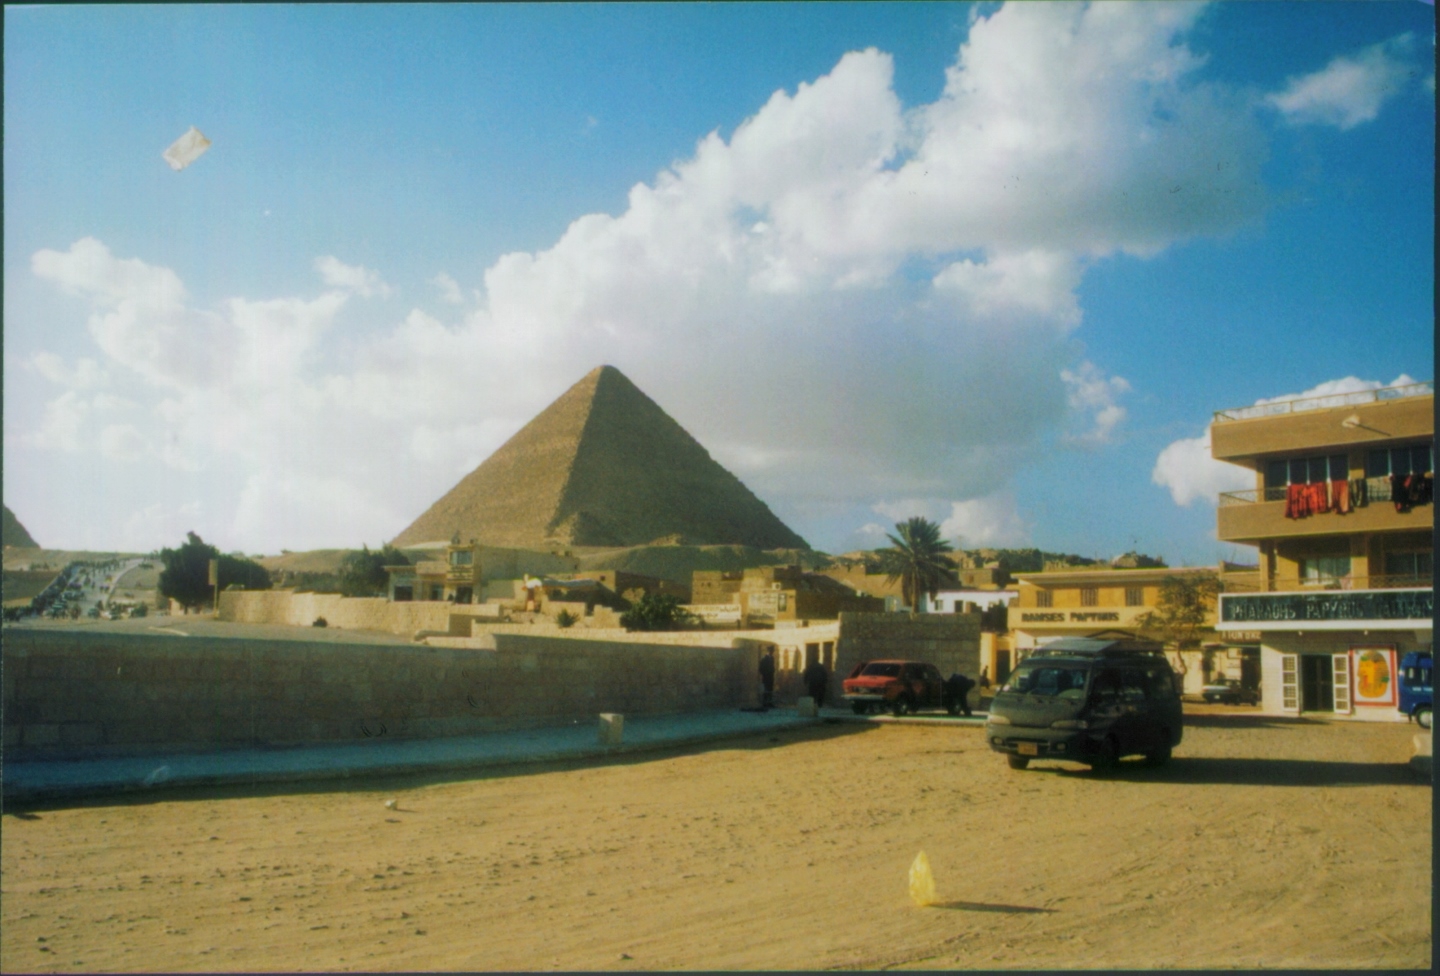 Development Near Pyramids of Giza Egypt 1998